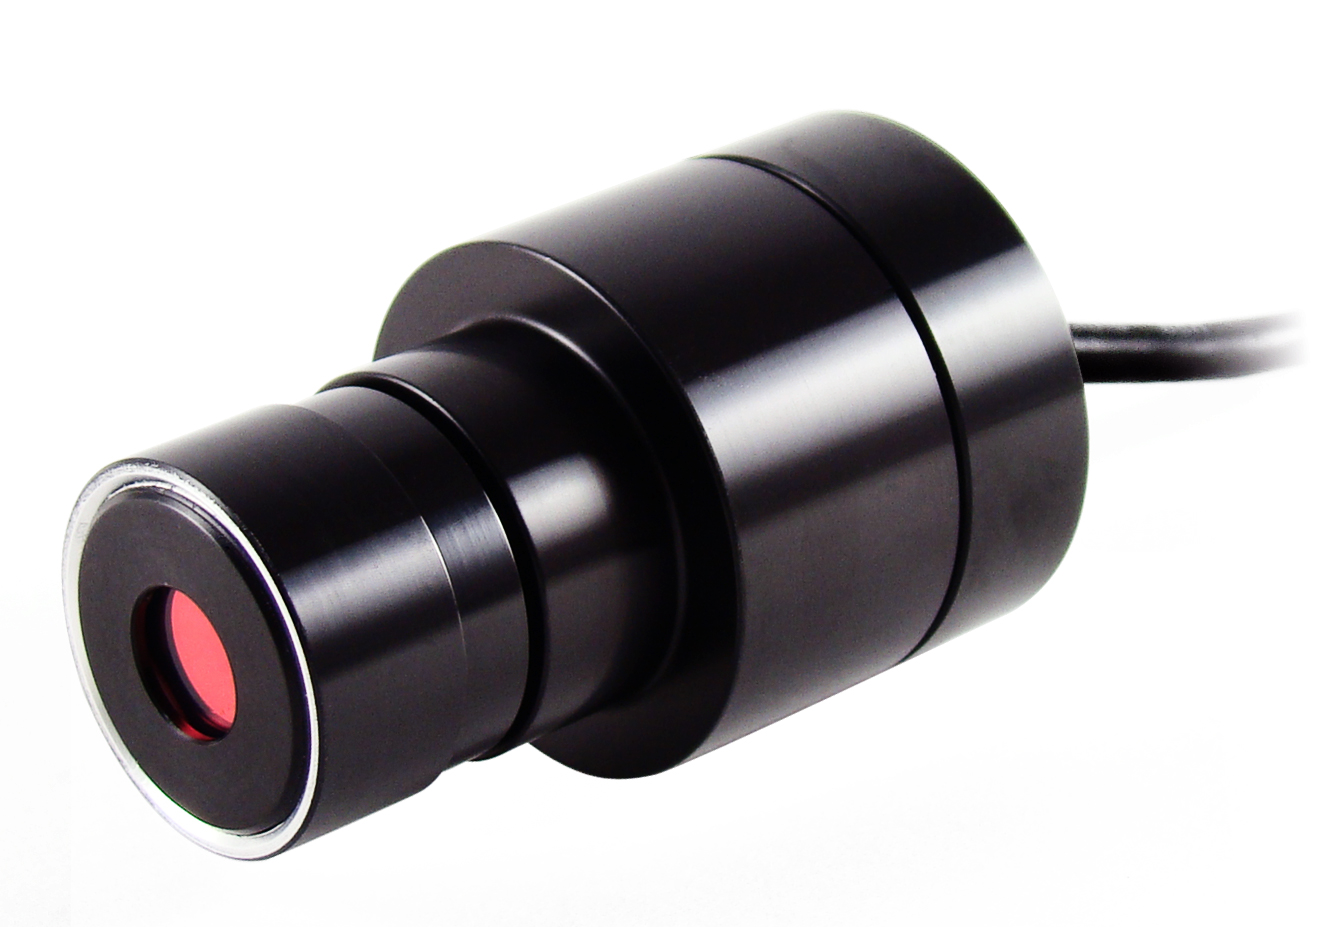 DinoEye AM4023 Eyepiece USB Microscope Camera